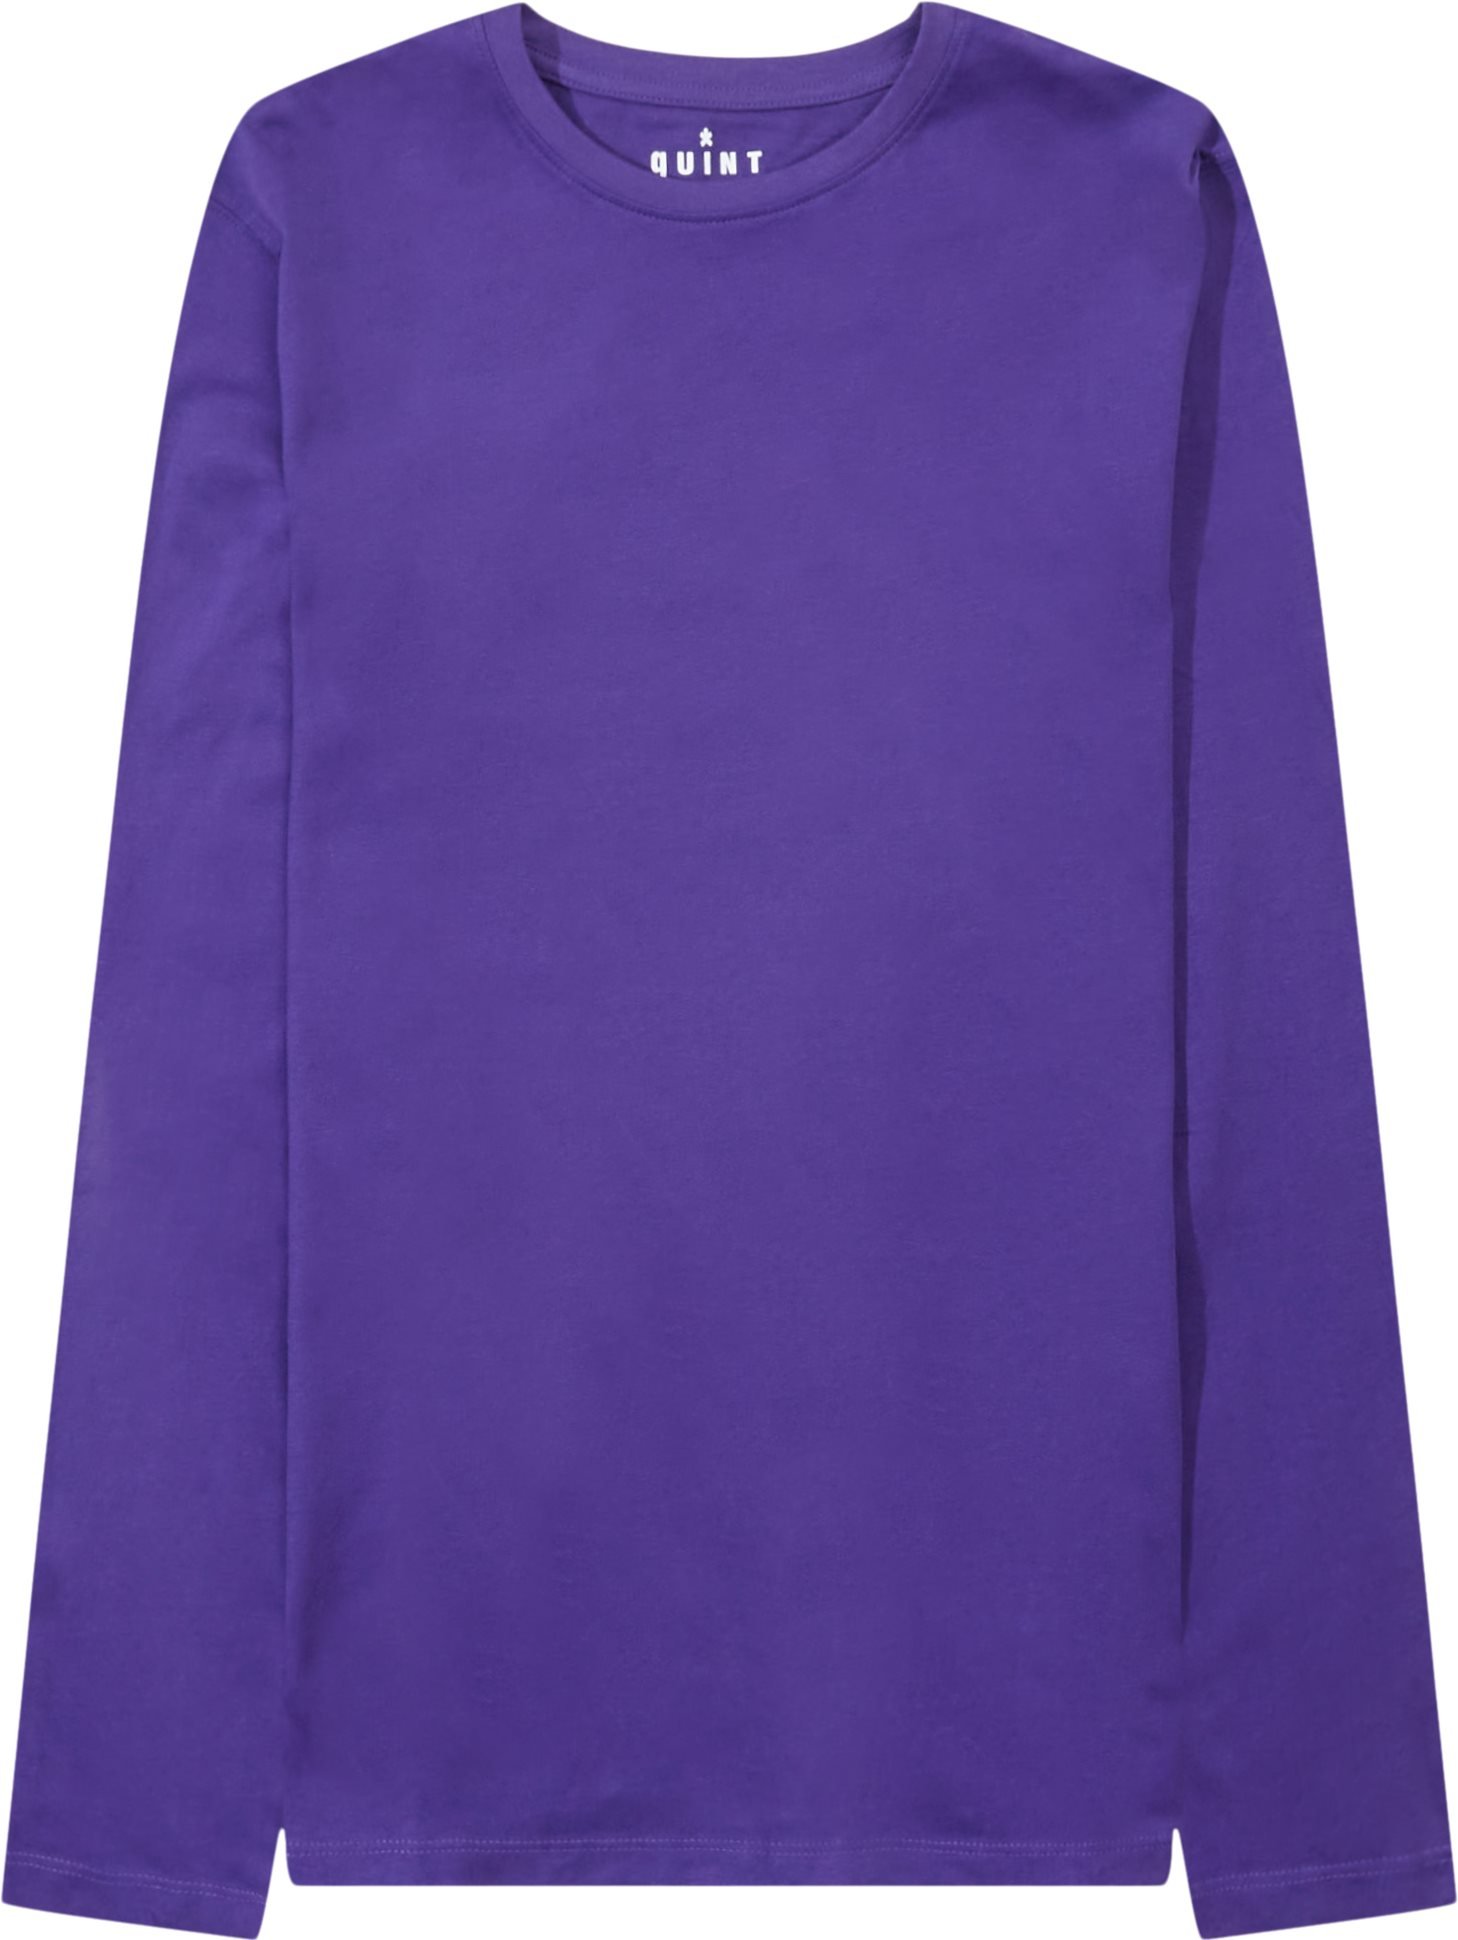 Ray Long Sleeve Tee - T-shirts - Regular fit - Lilac